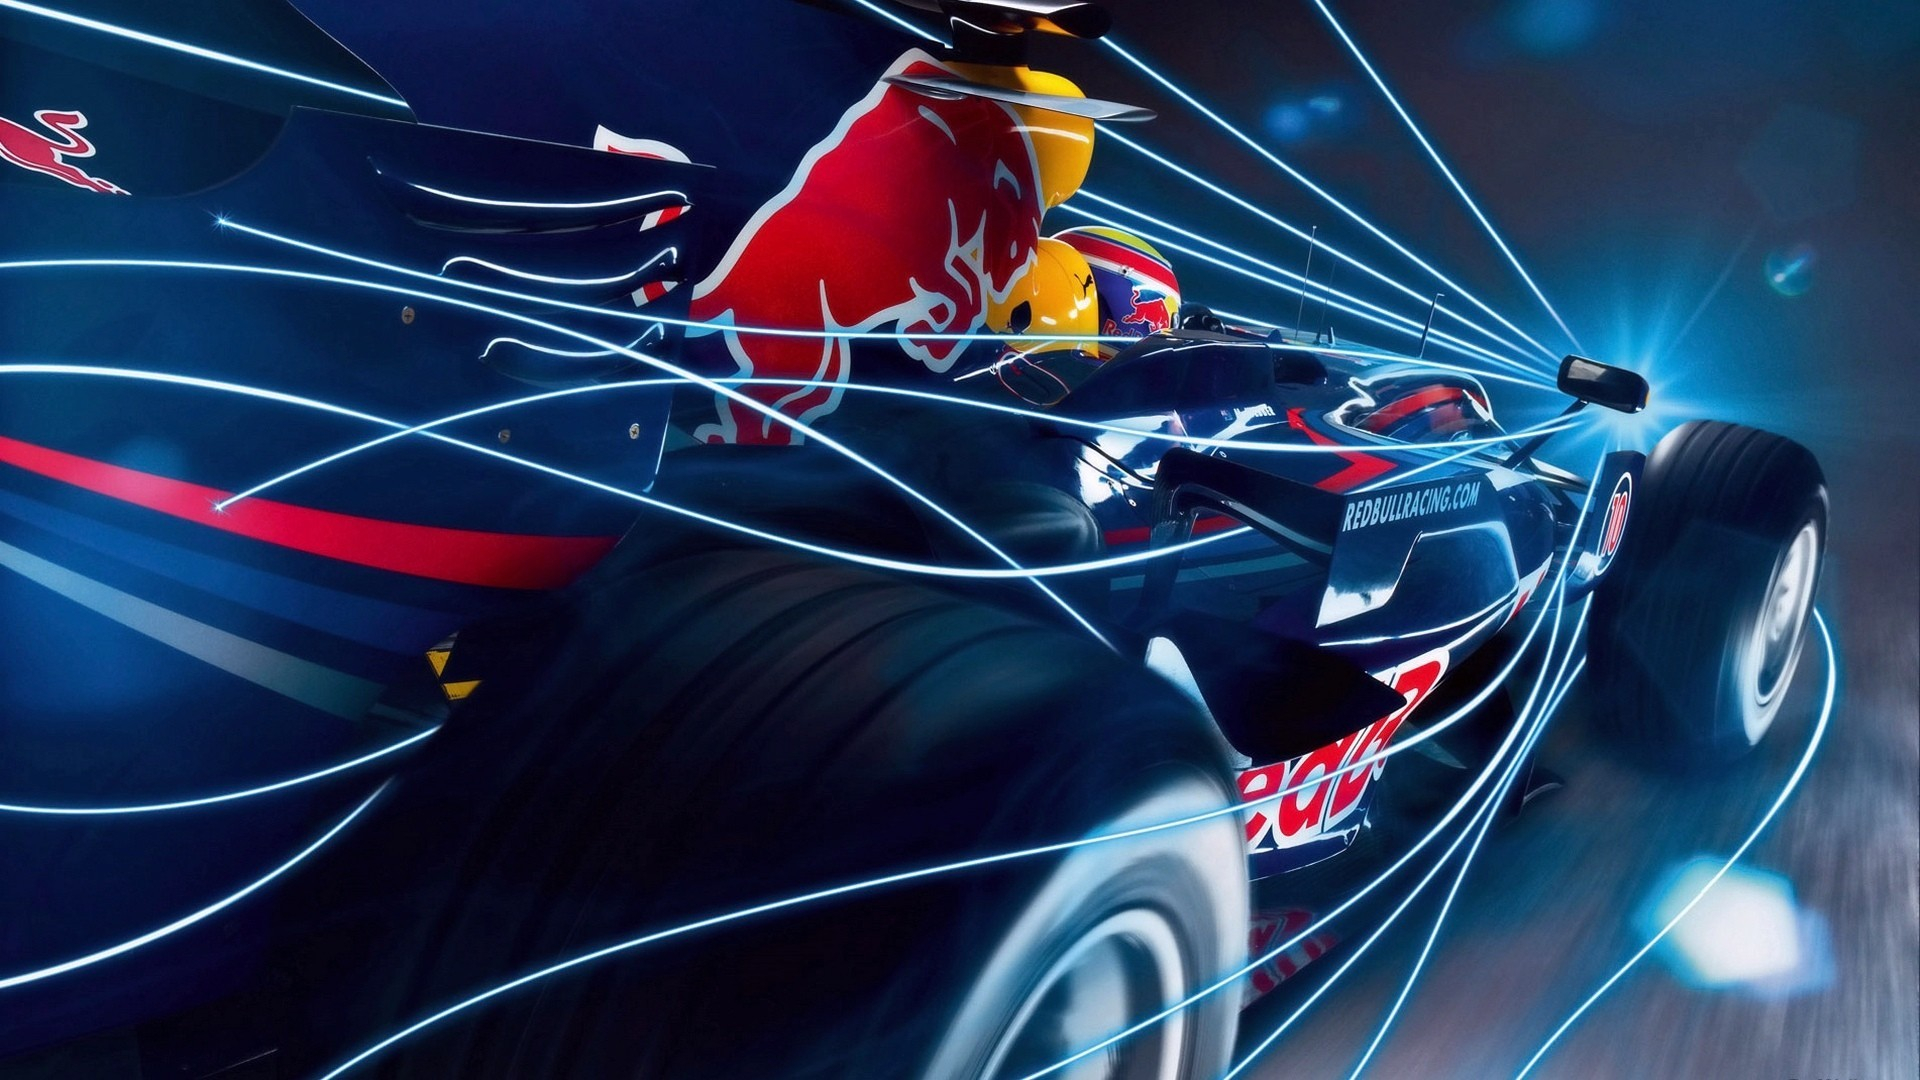 1920x1080 Wallpaper : illustration, vehicle, Formula 1, Red Bull Racing, racing, screenshot, computer wallpaper arg81 237321 HD Wallpapers